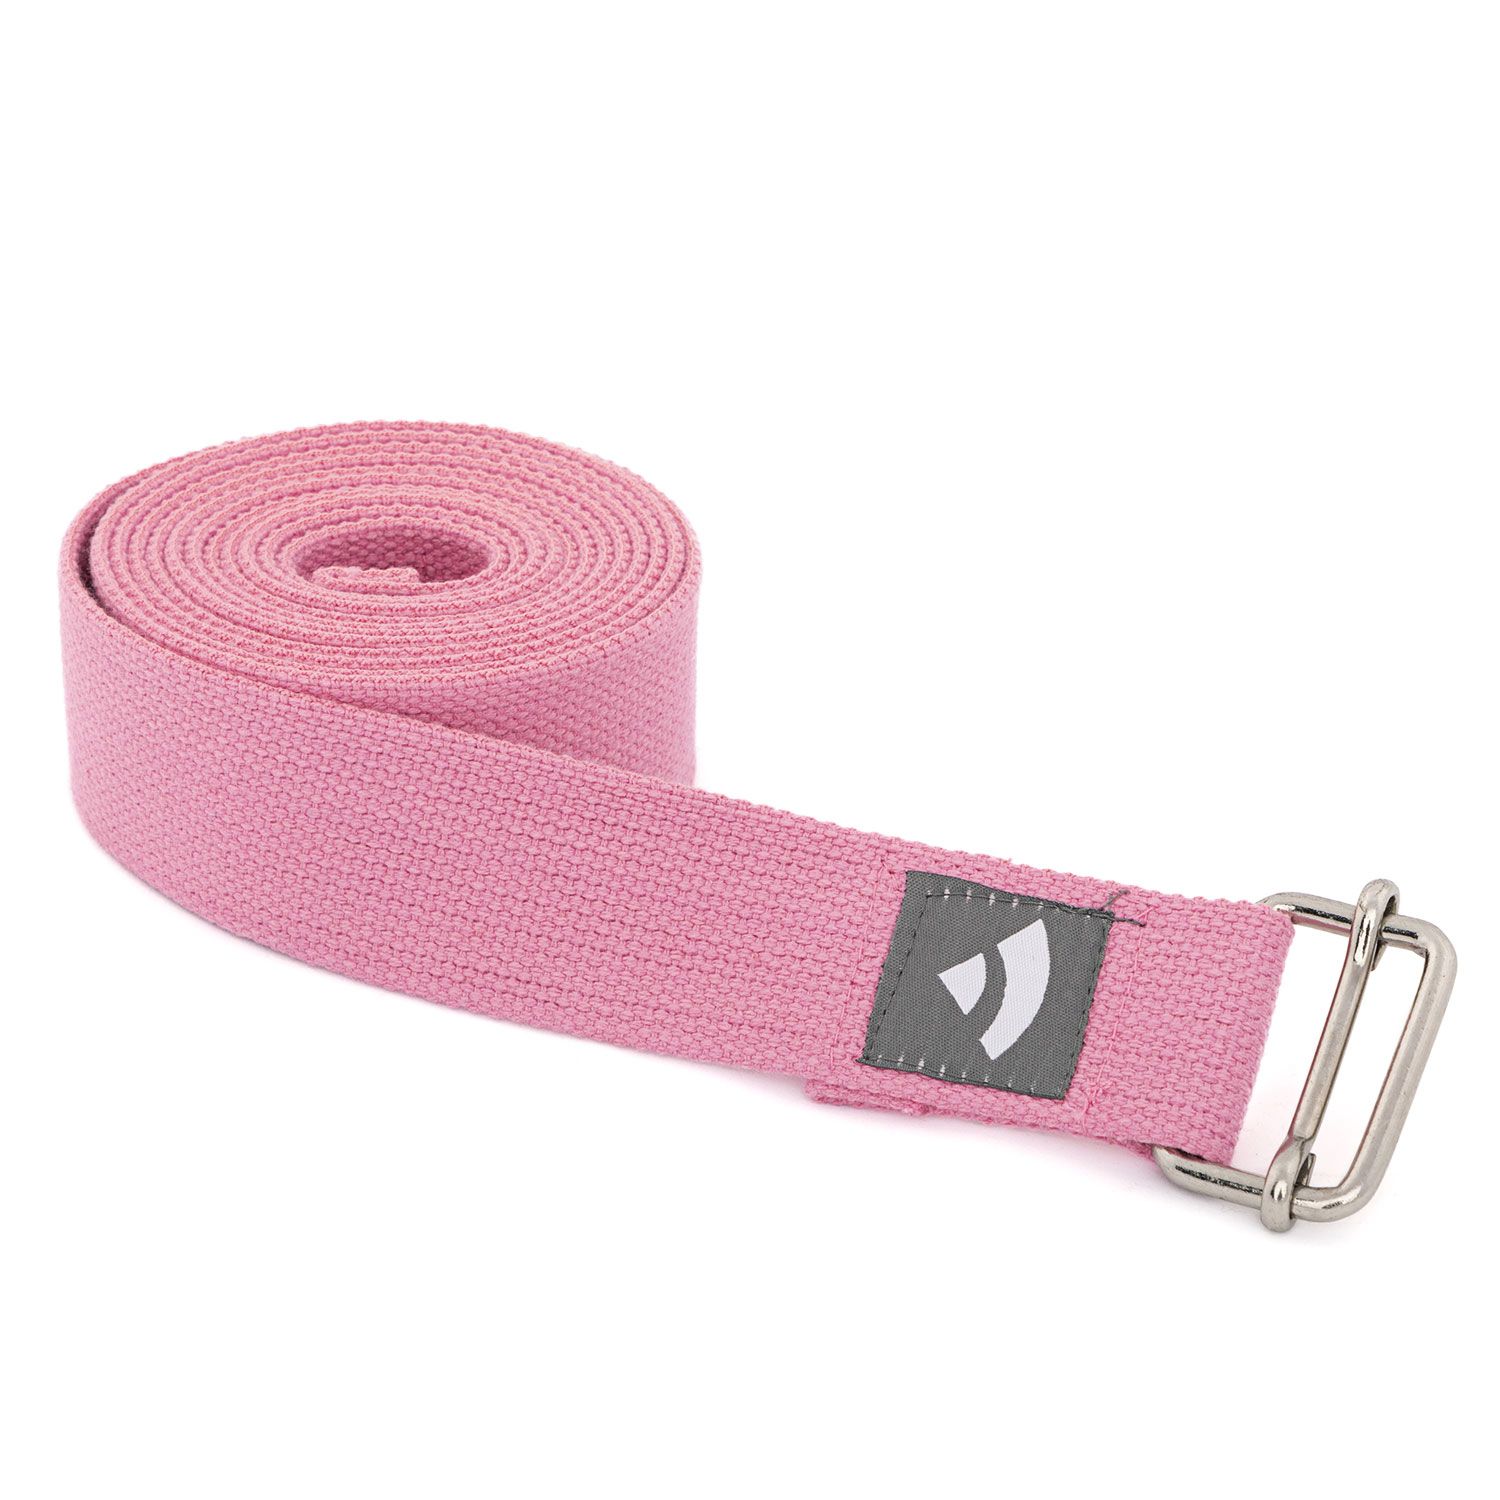 Yogagurt Asana Belt, Schiebeschnalle Baumwolle pink 910-SP